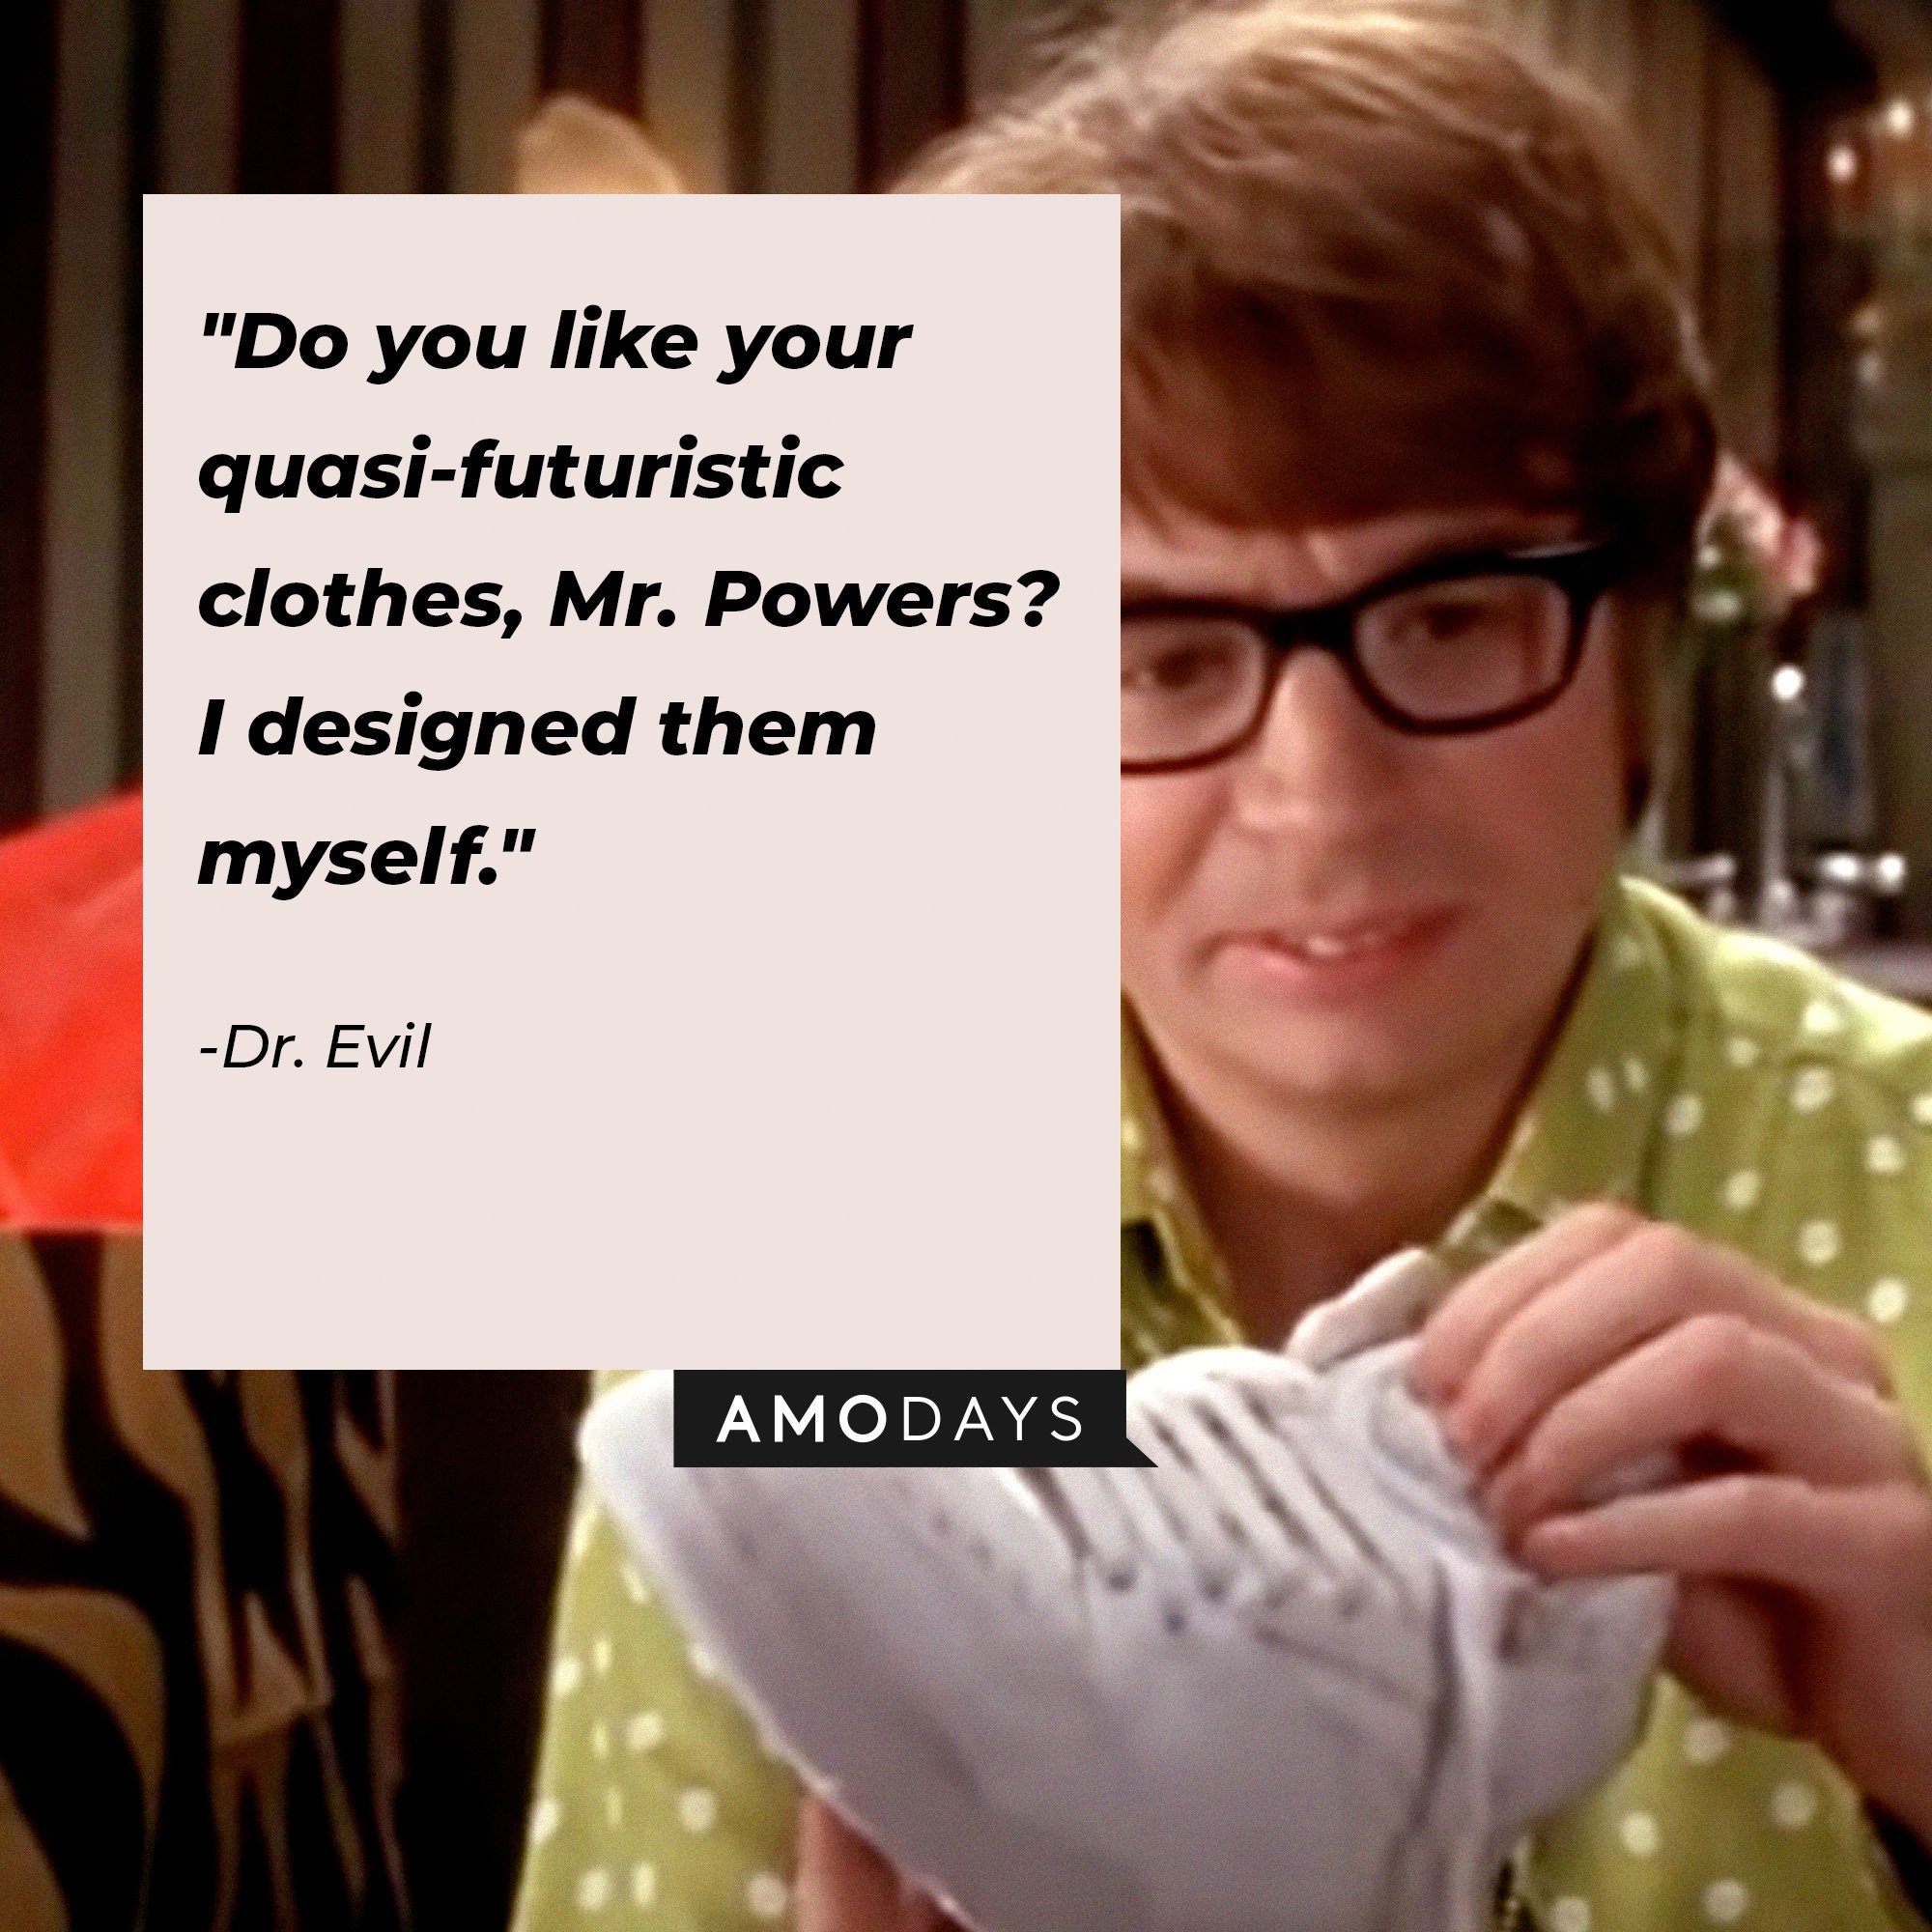   Dr. Evil’s quote: "Do you like your quasi-futuristic clothes, Mr. Powers? I designed them myself." | Image: Amodays